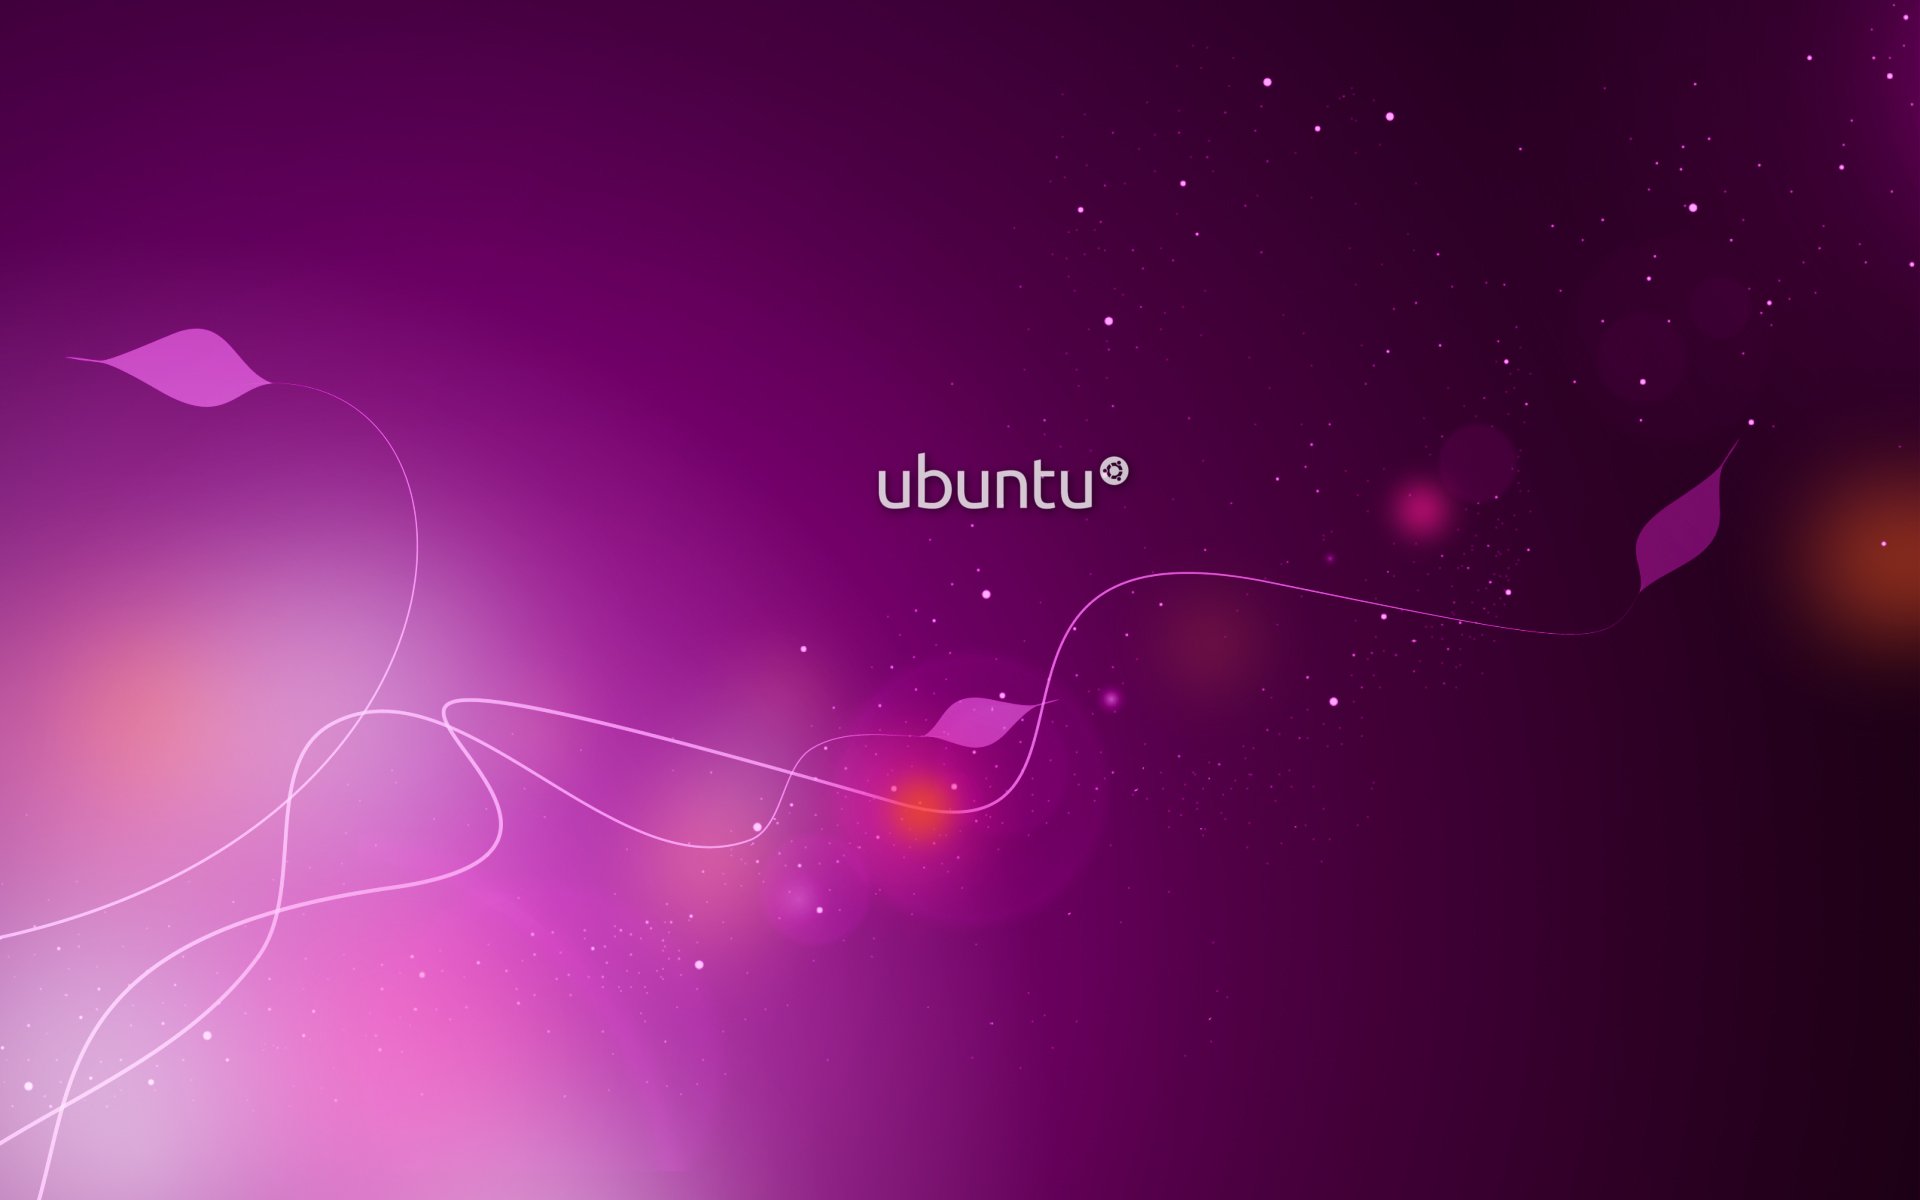 ubuntu wallpaper,violet,purple,pink,sky,light